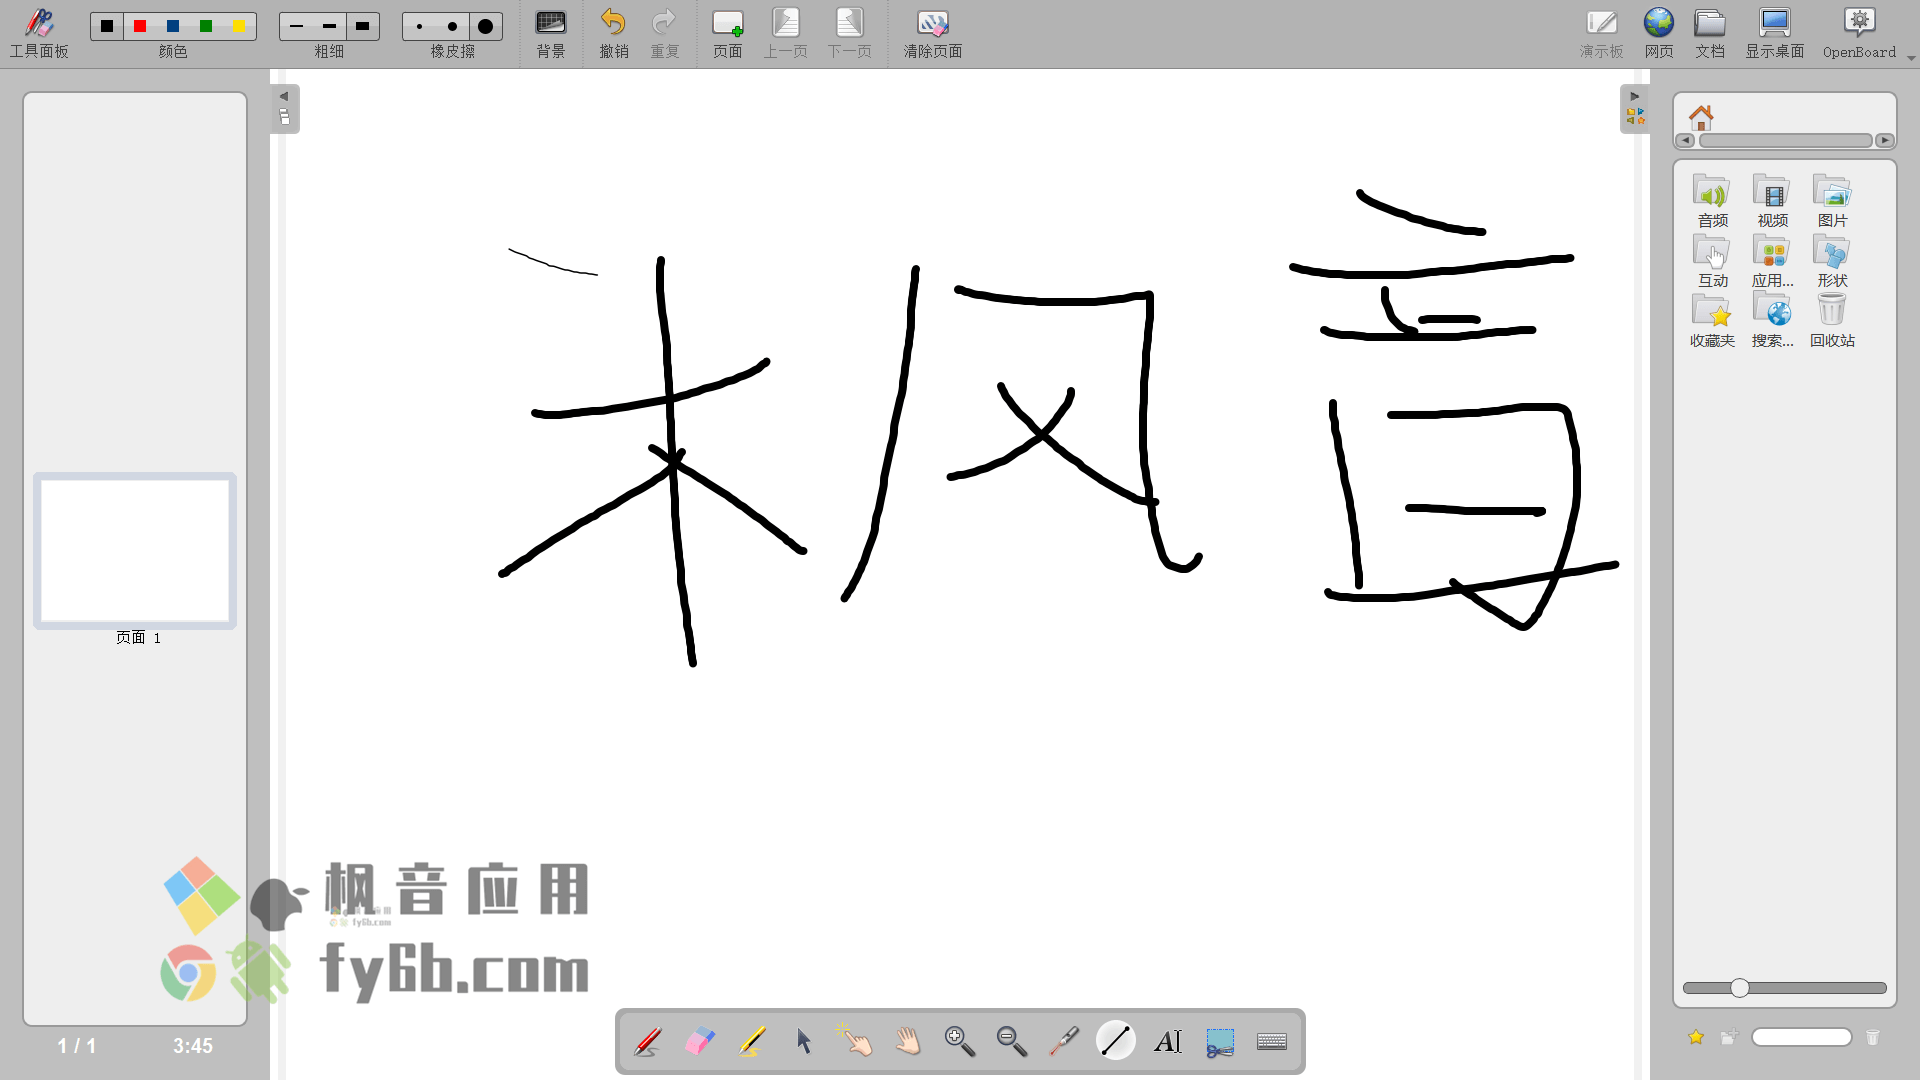 Windows Openboard 电子白板_v1.6.4 中文版 屏幕教学注释